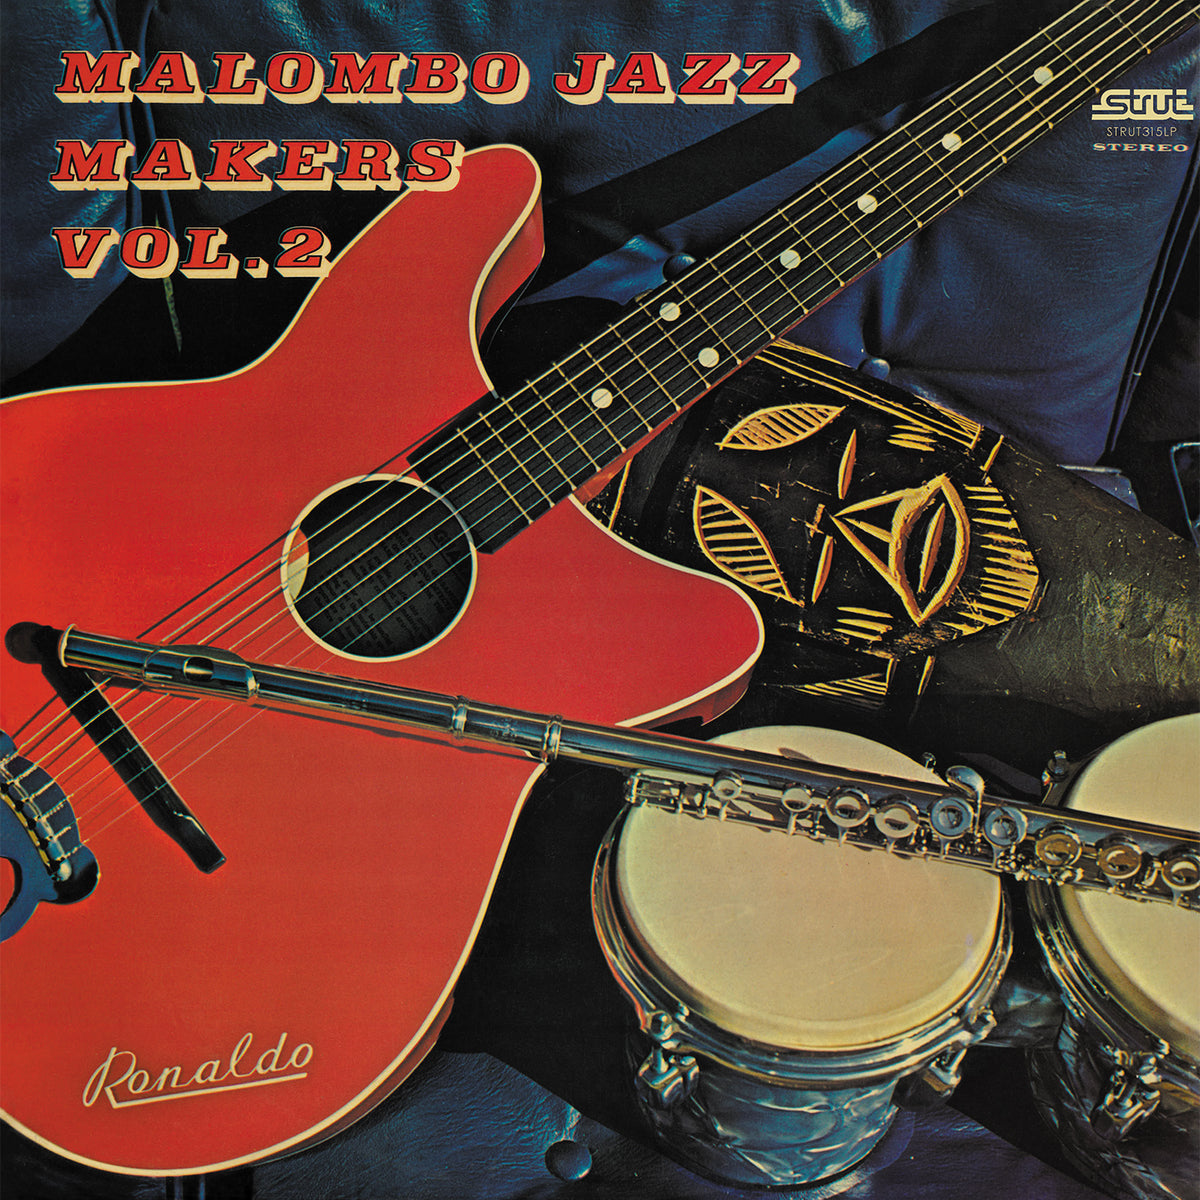 Malombo Jazz Makers Vol.2